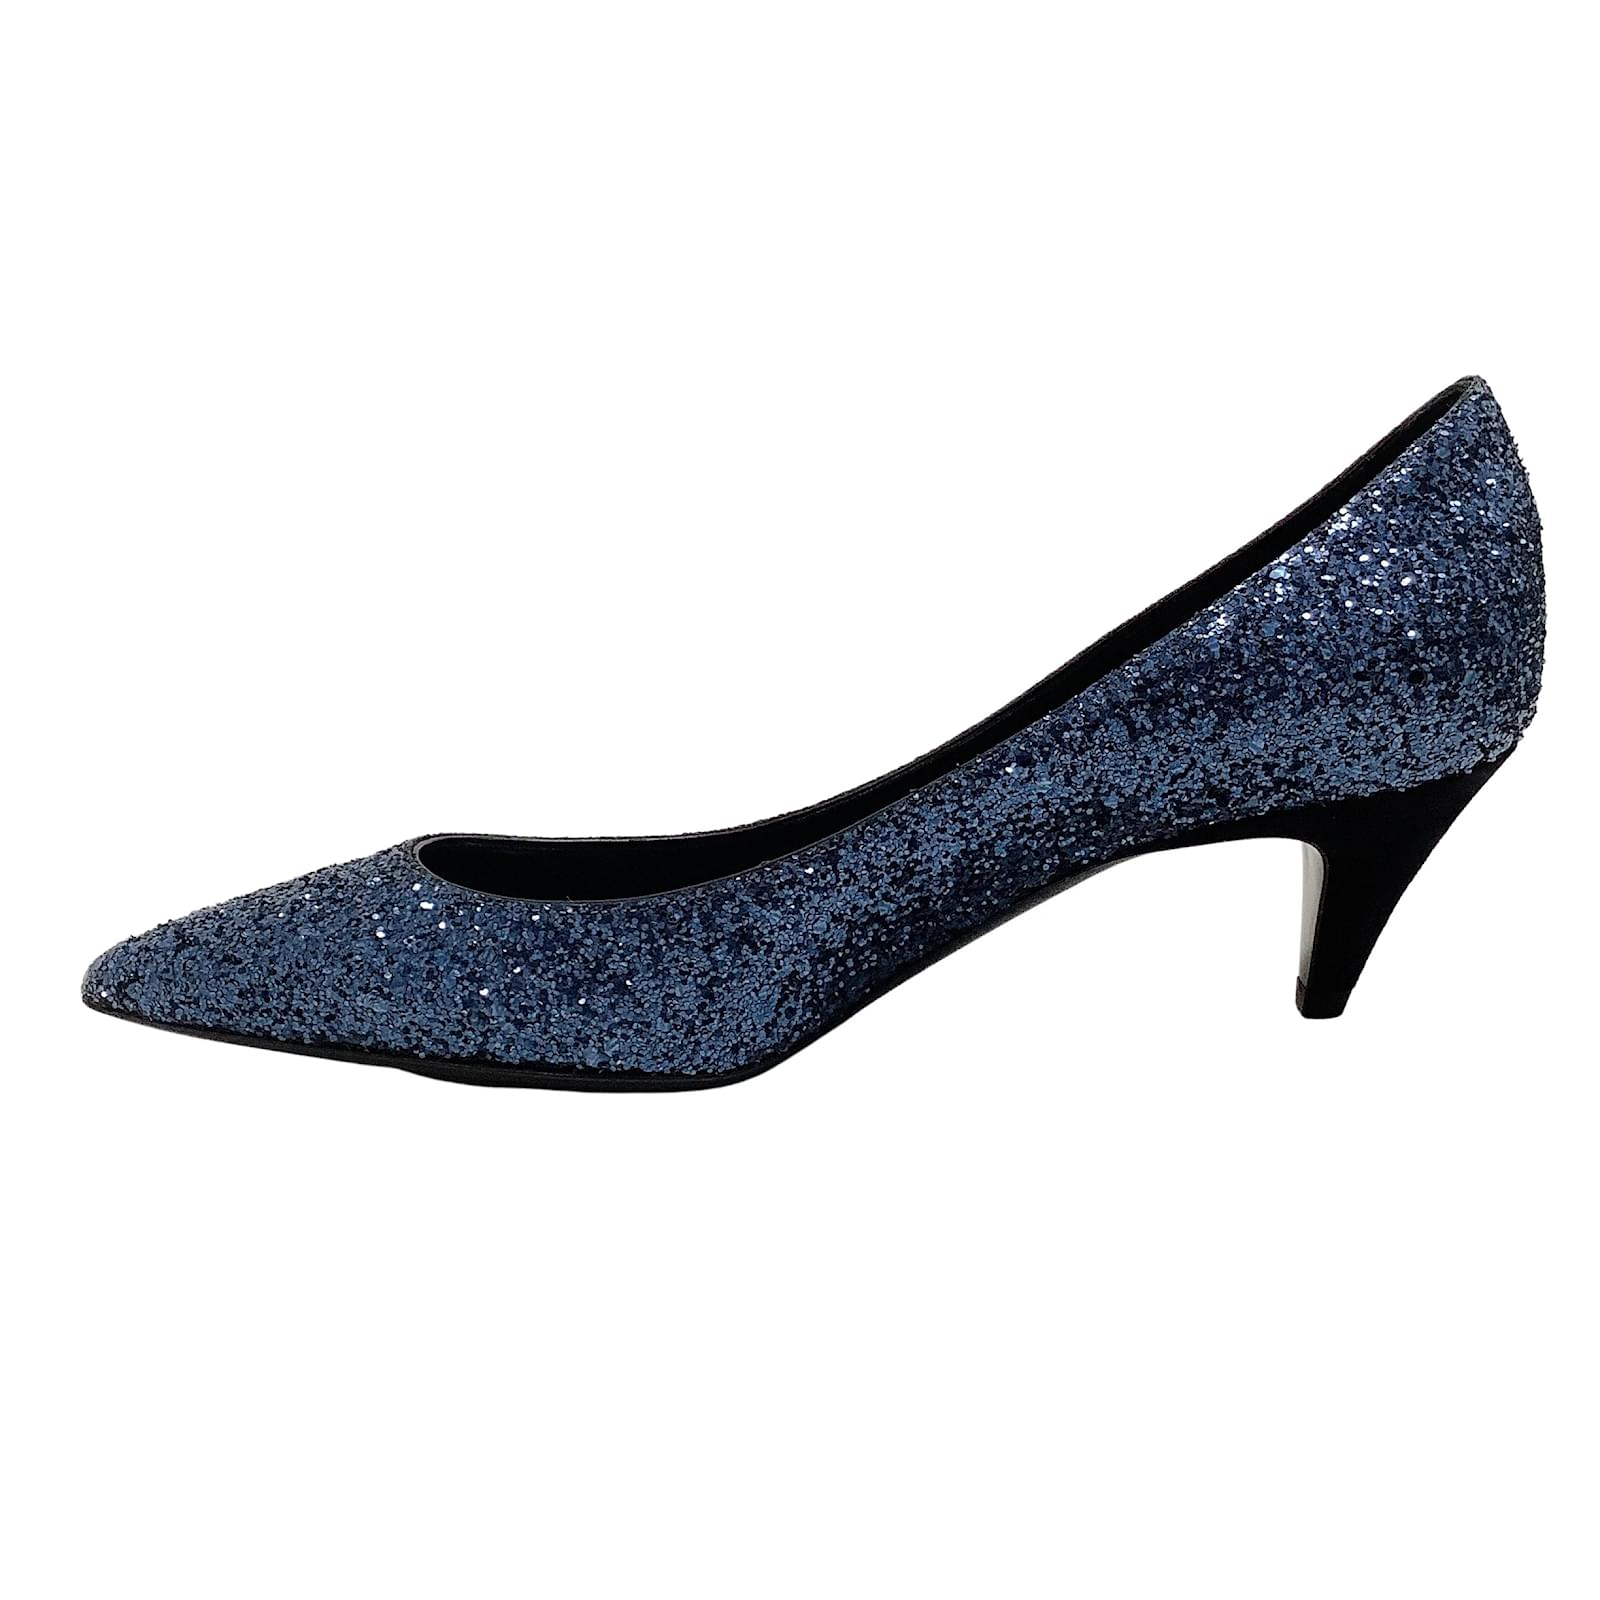 Sparkly Sapphire/cobalt blue heels!